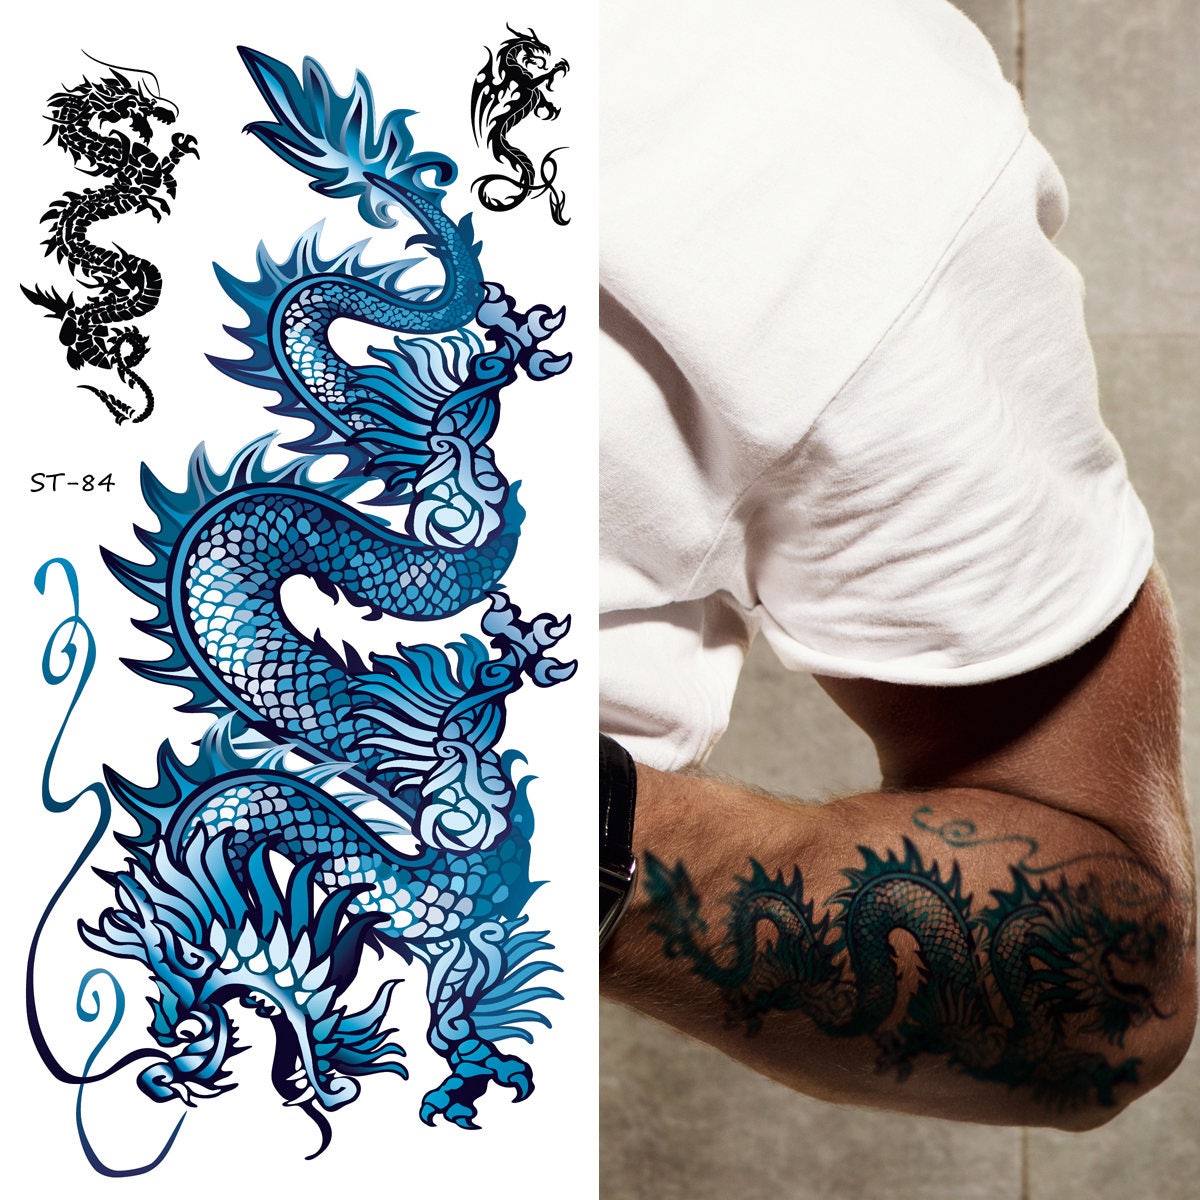 Classic Dragon  Classic Dragon Temporary Tattoos  Momentary Ink